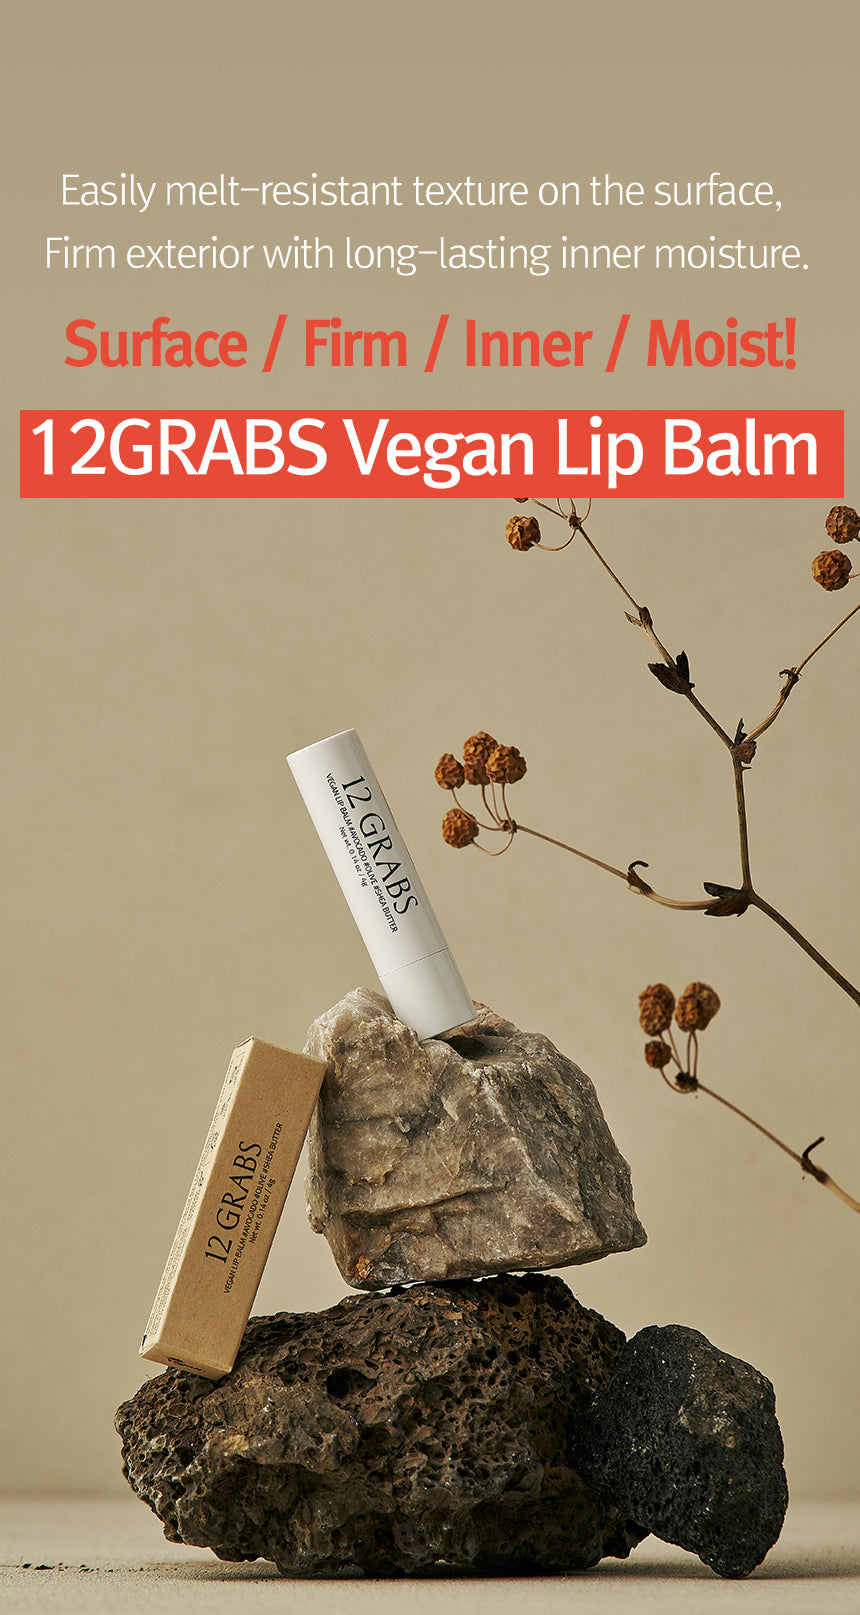 12GRABS Vegan Lip Balm 4g